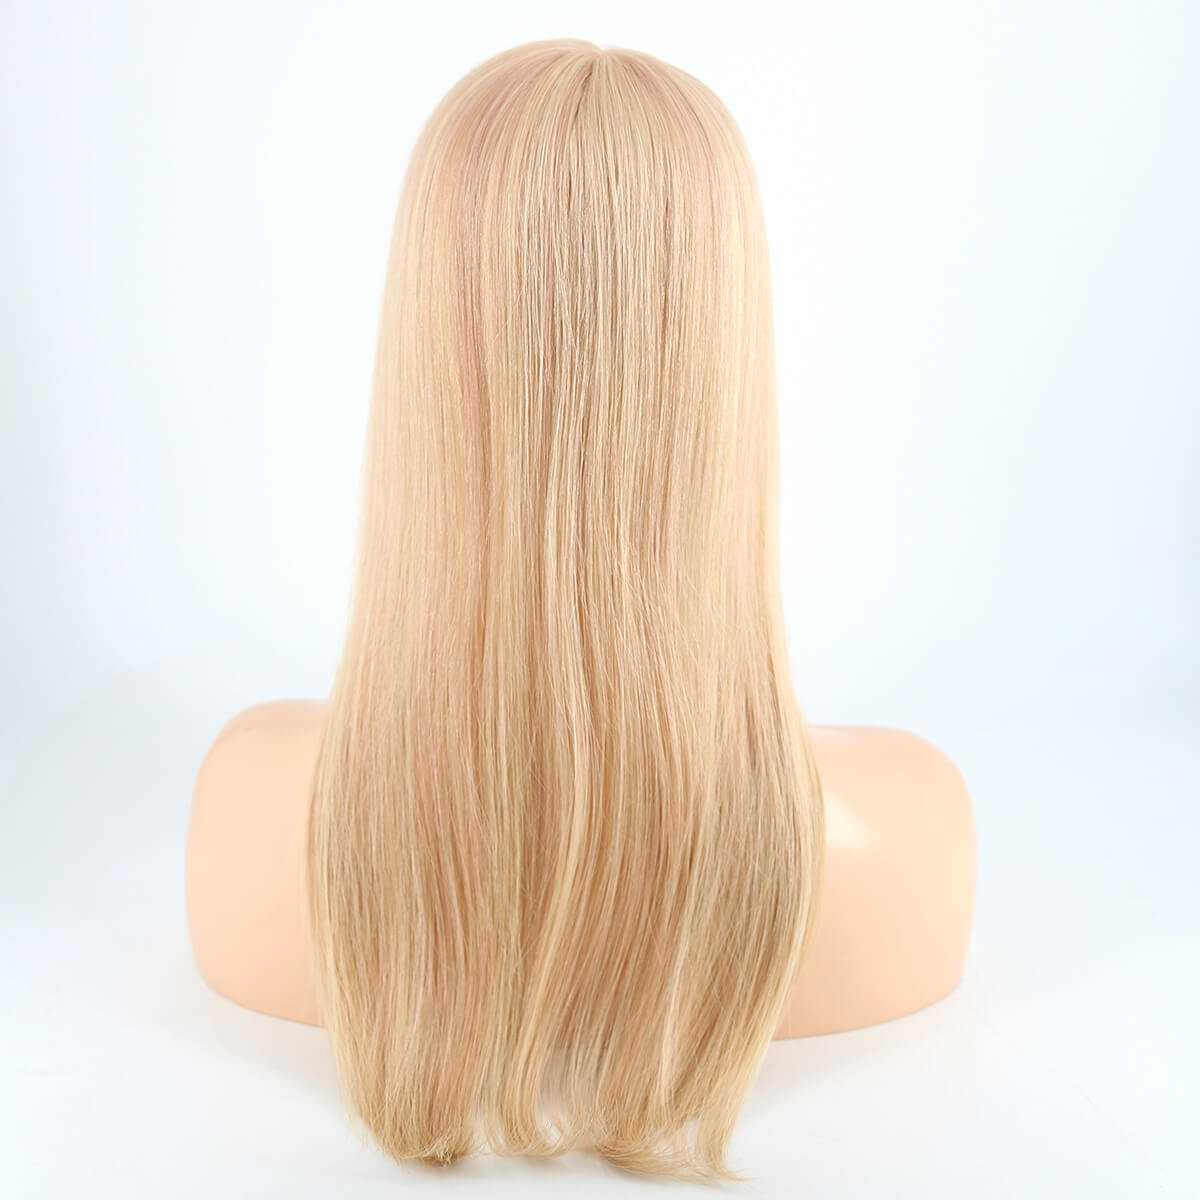 Blonde human hair topper for women